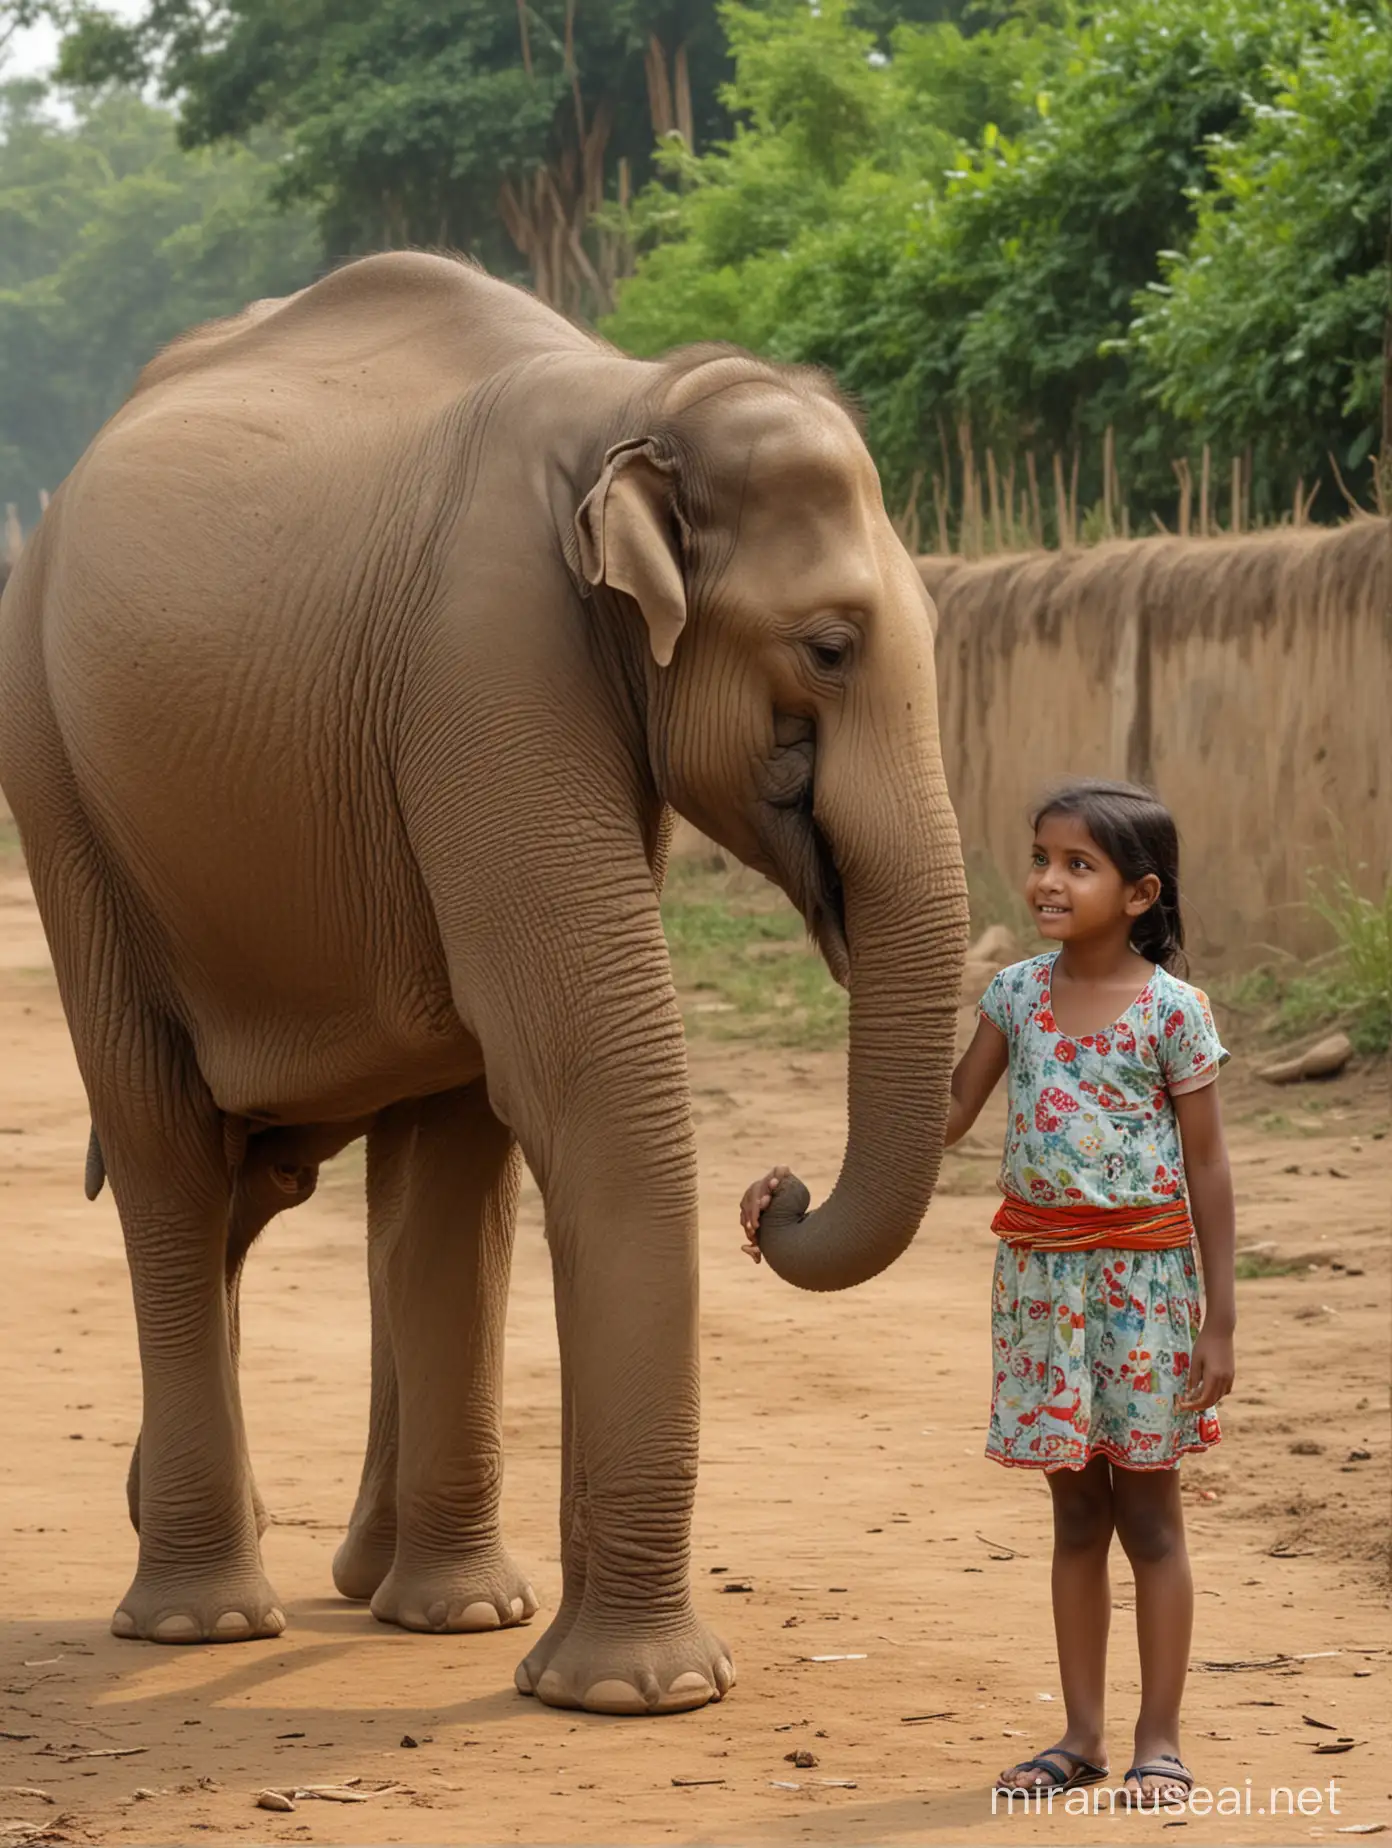 Small elephant comparison a bengali girl